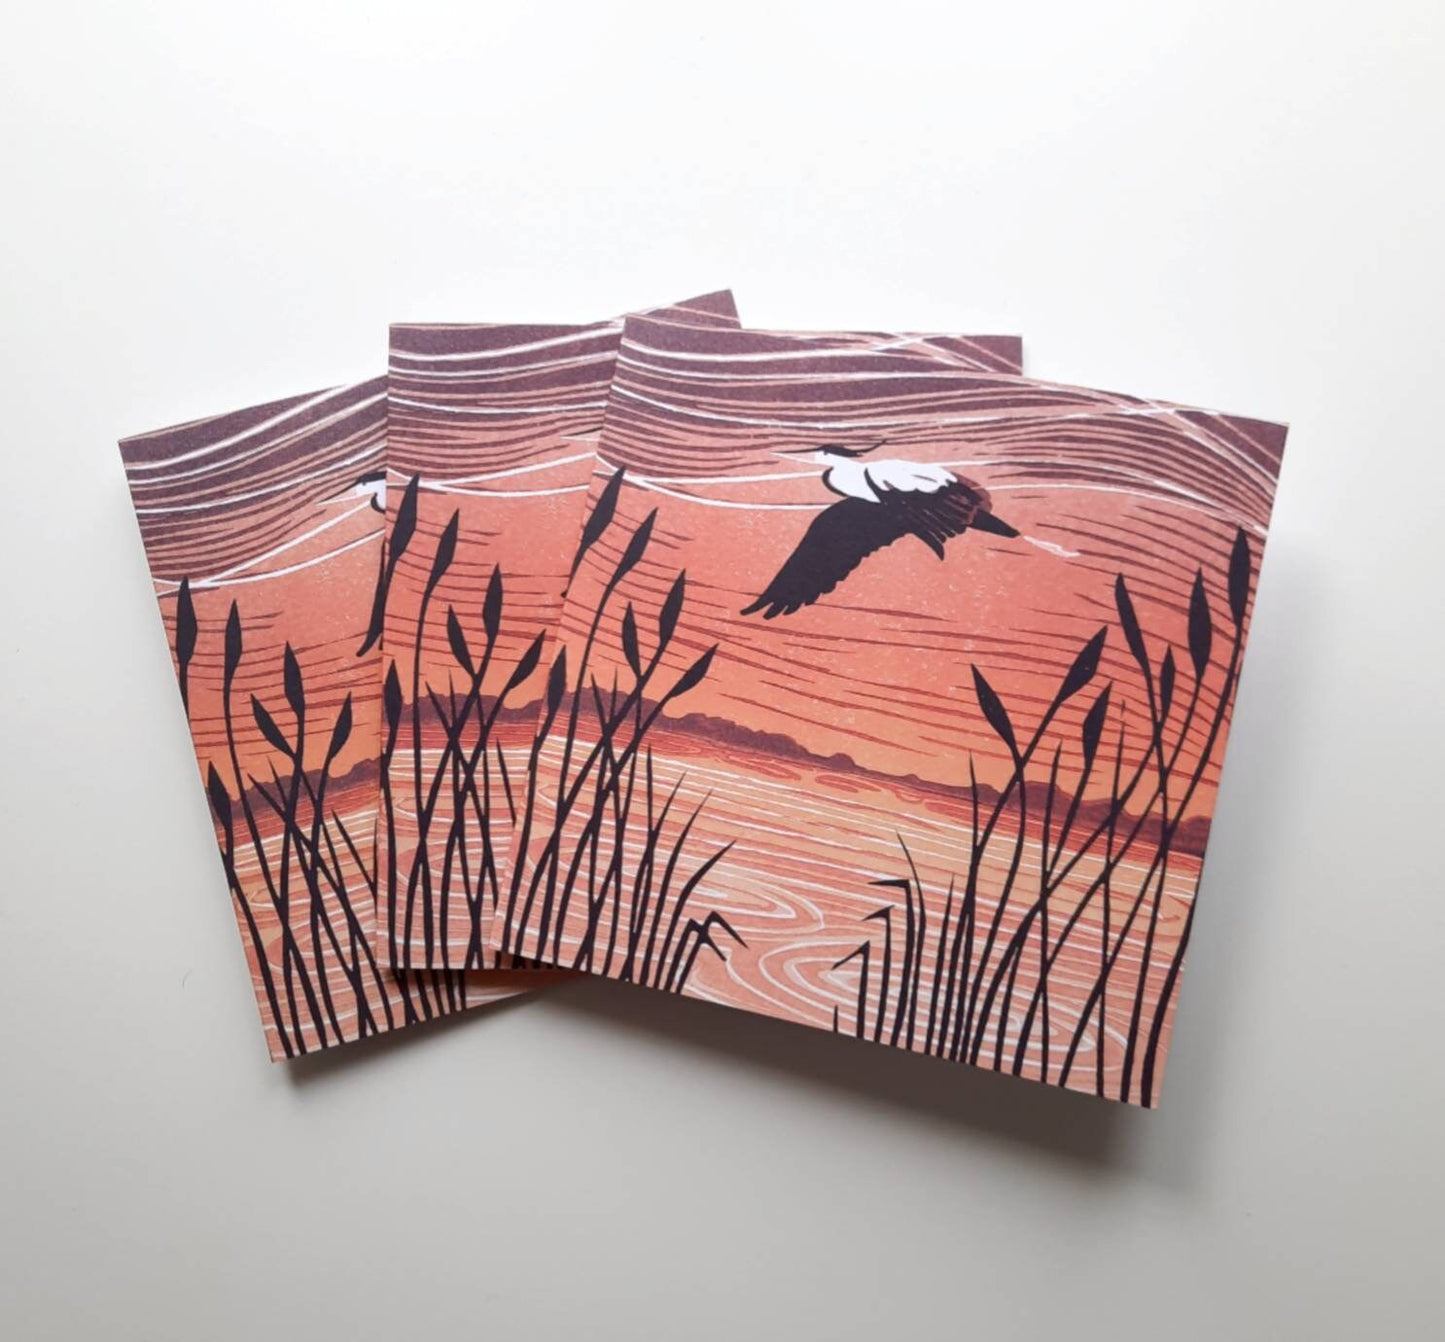 In Flight - Greetings Card | Lino Print reproduction | Heron Landscape | Notecard